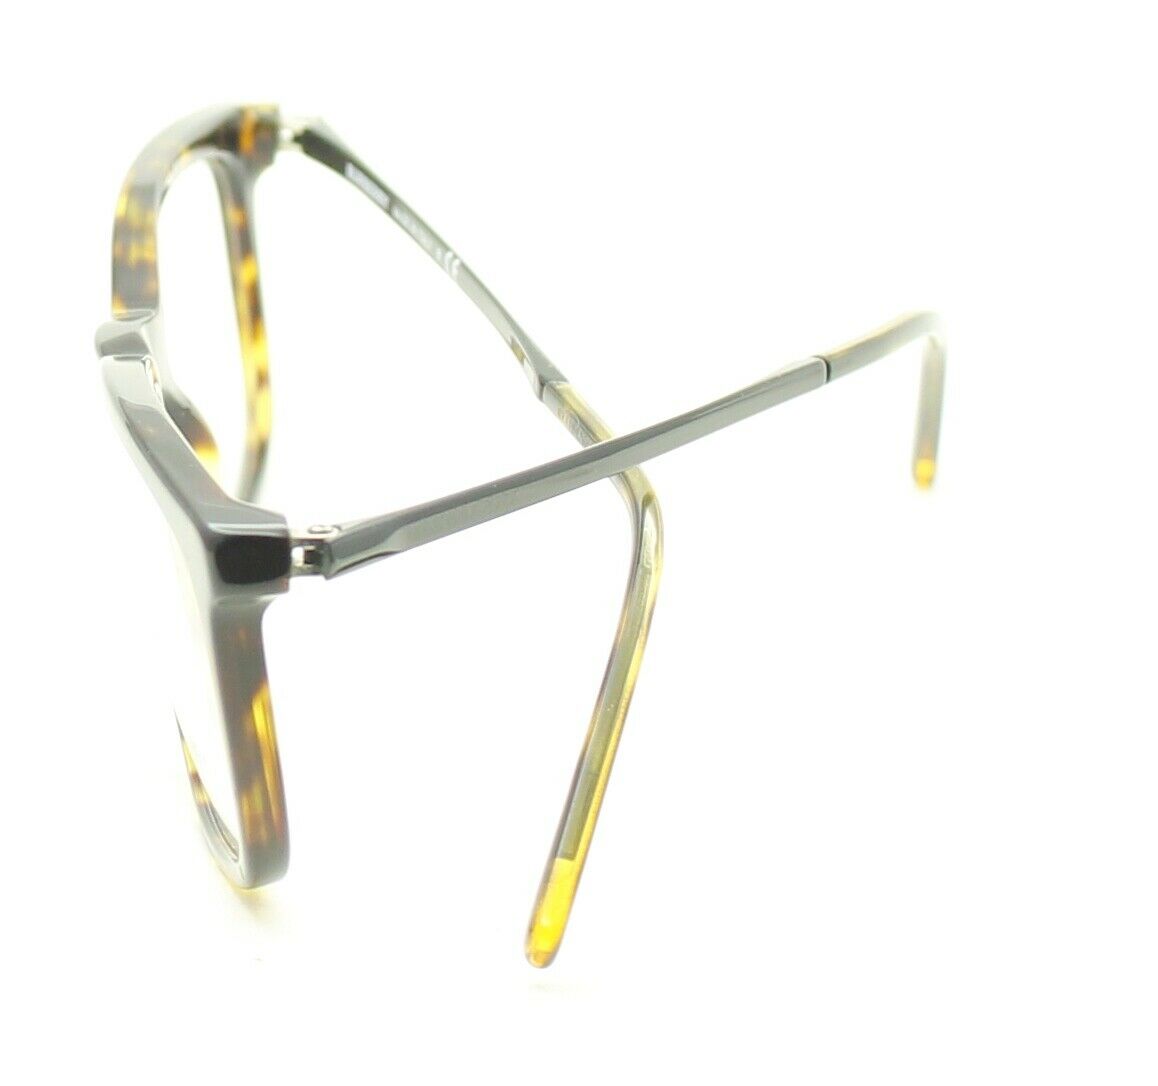 BURBERRY B 2267 3002 53mm Eyewear FRAMES RX Optical Glasses Eyeglasses New Italy